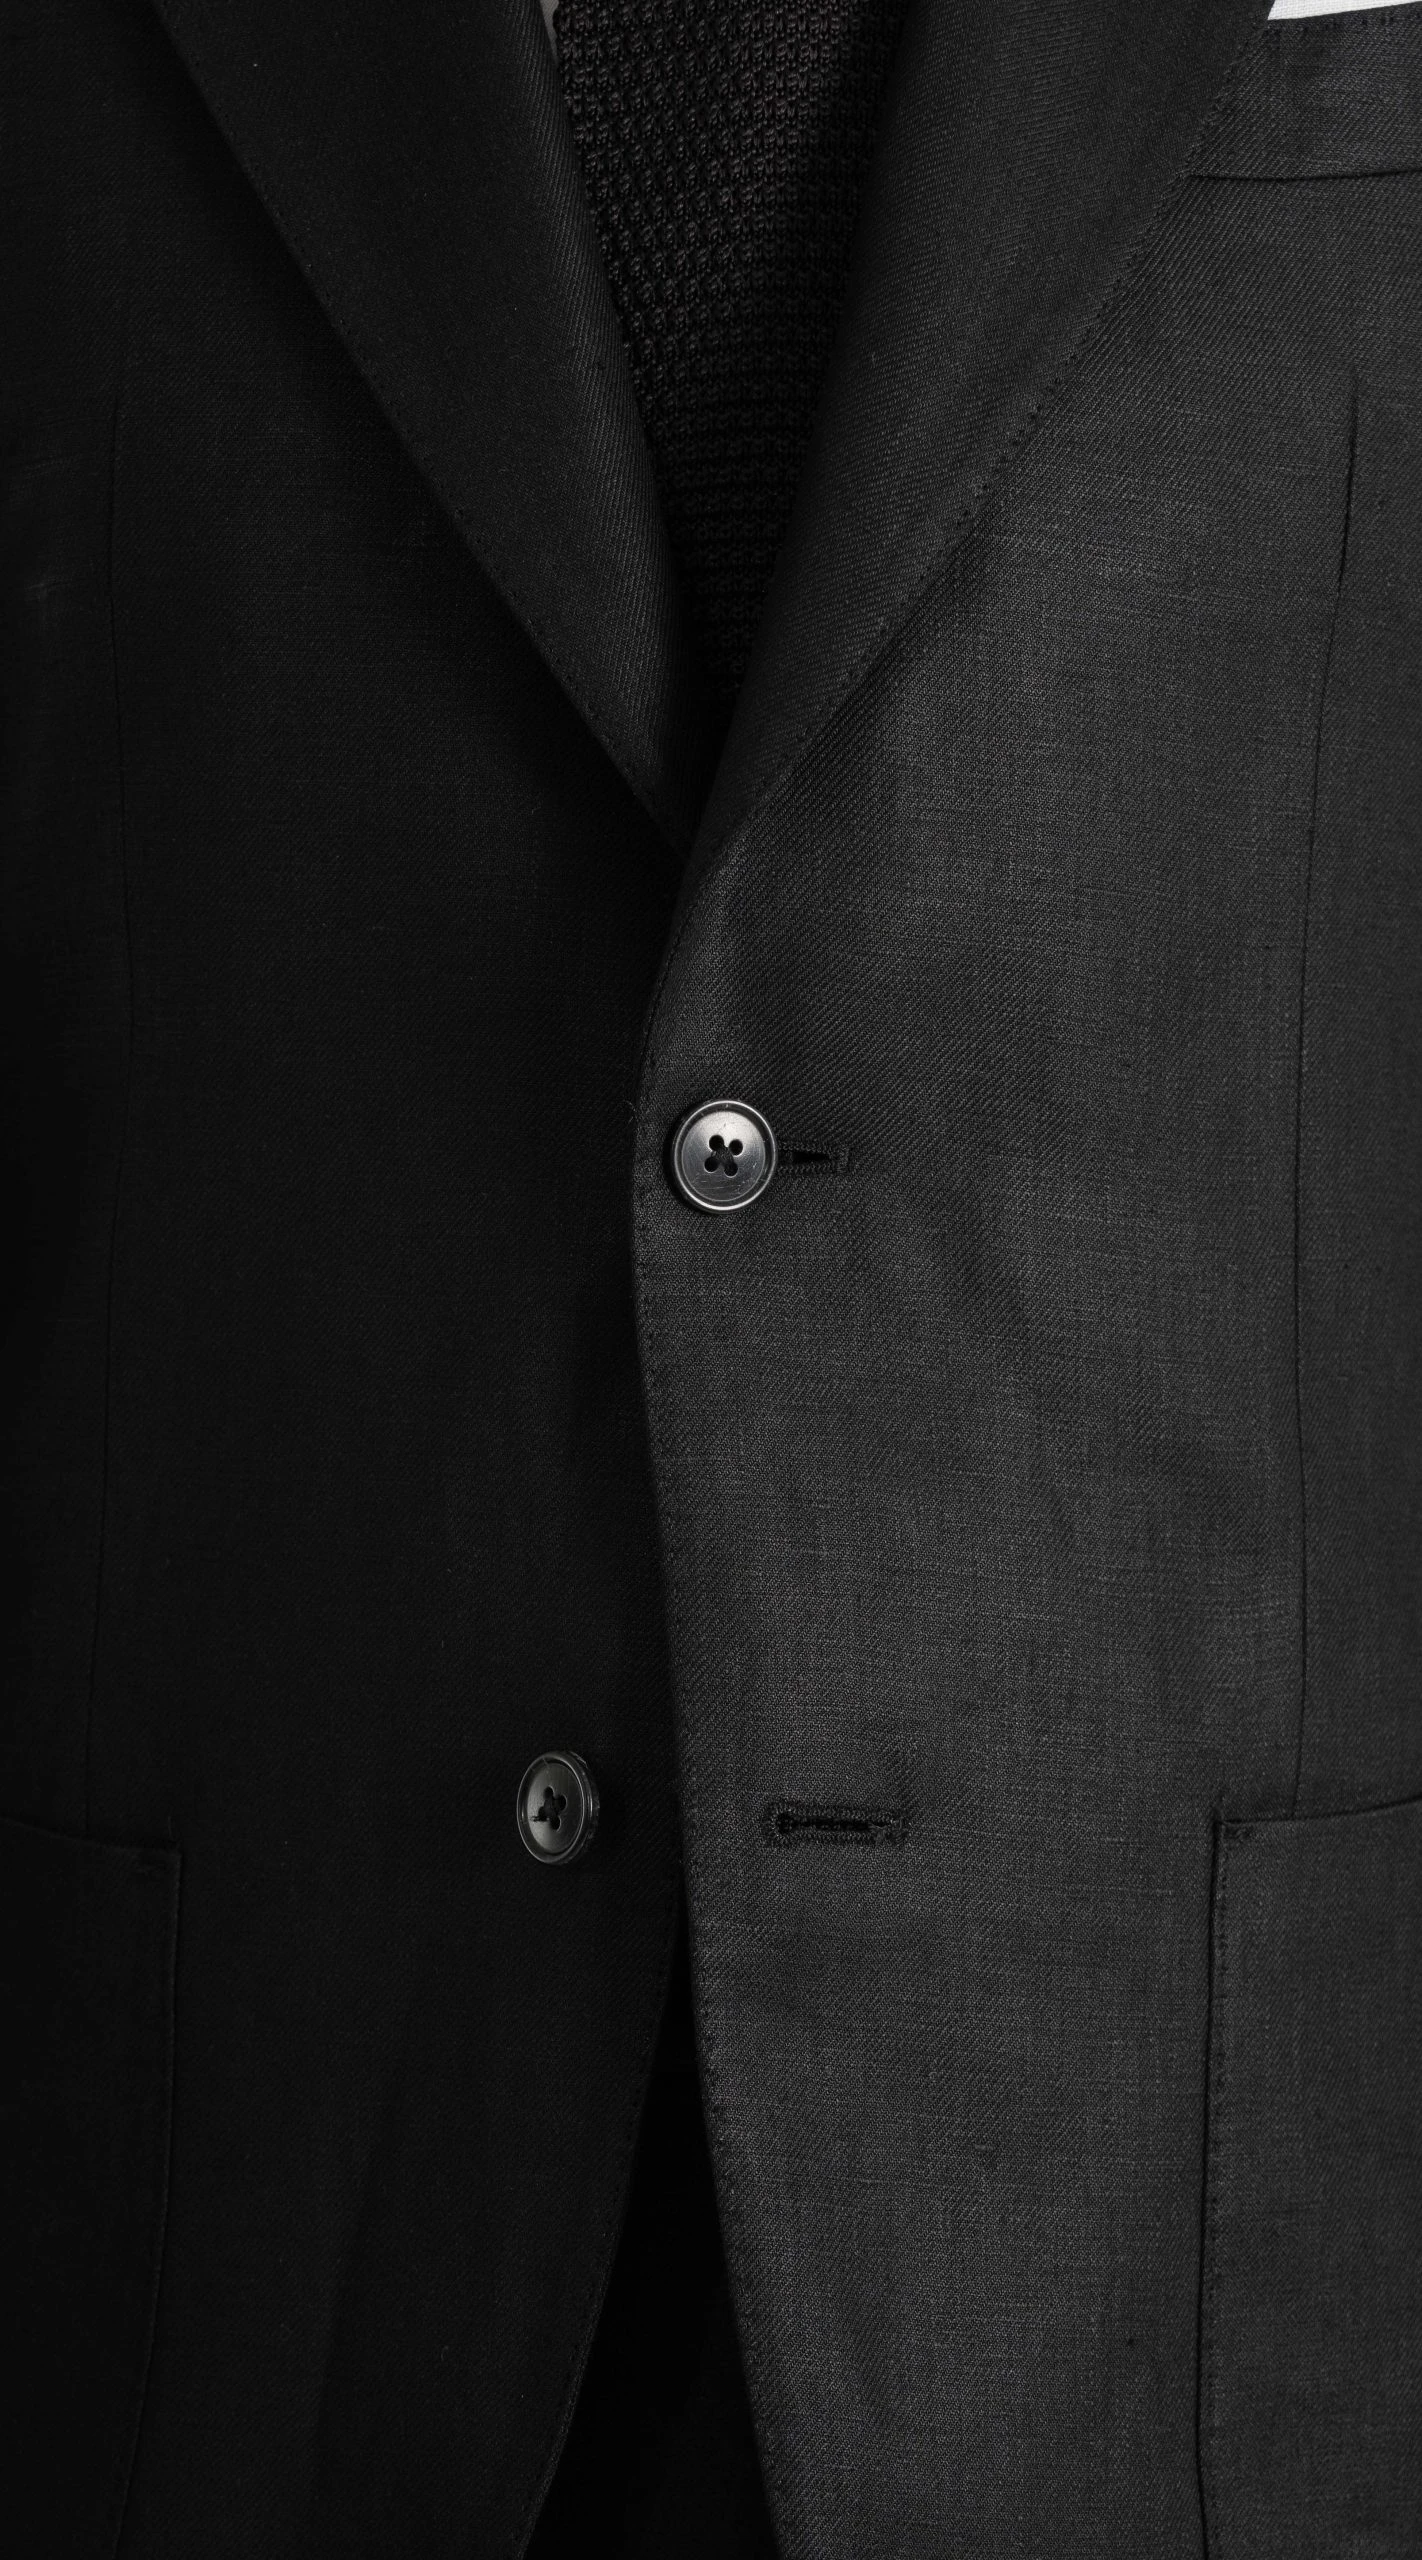 1 Mond black irish linen suit